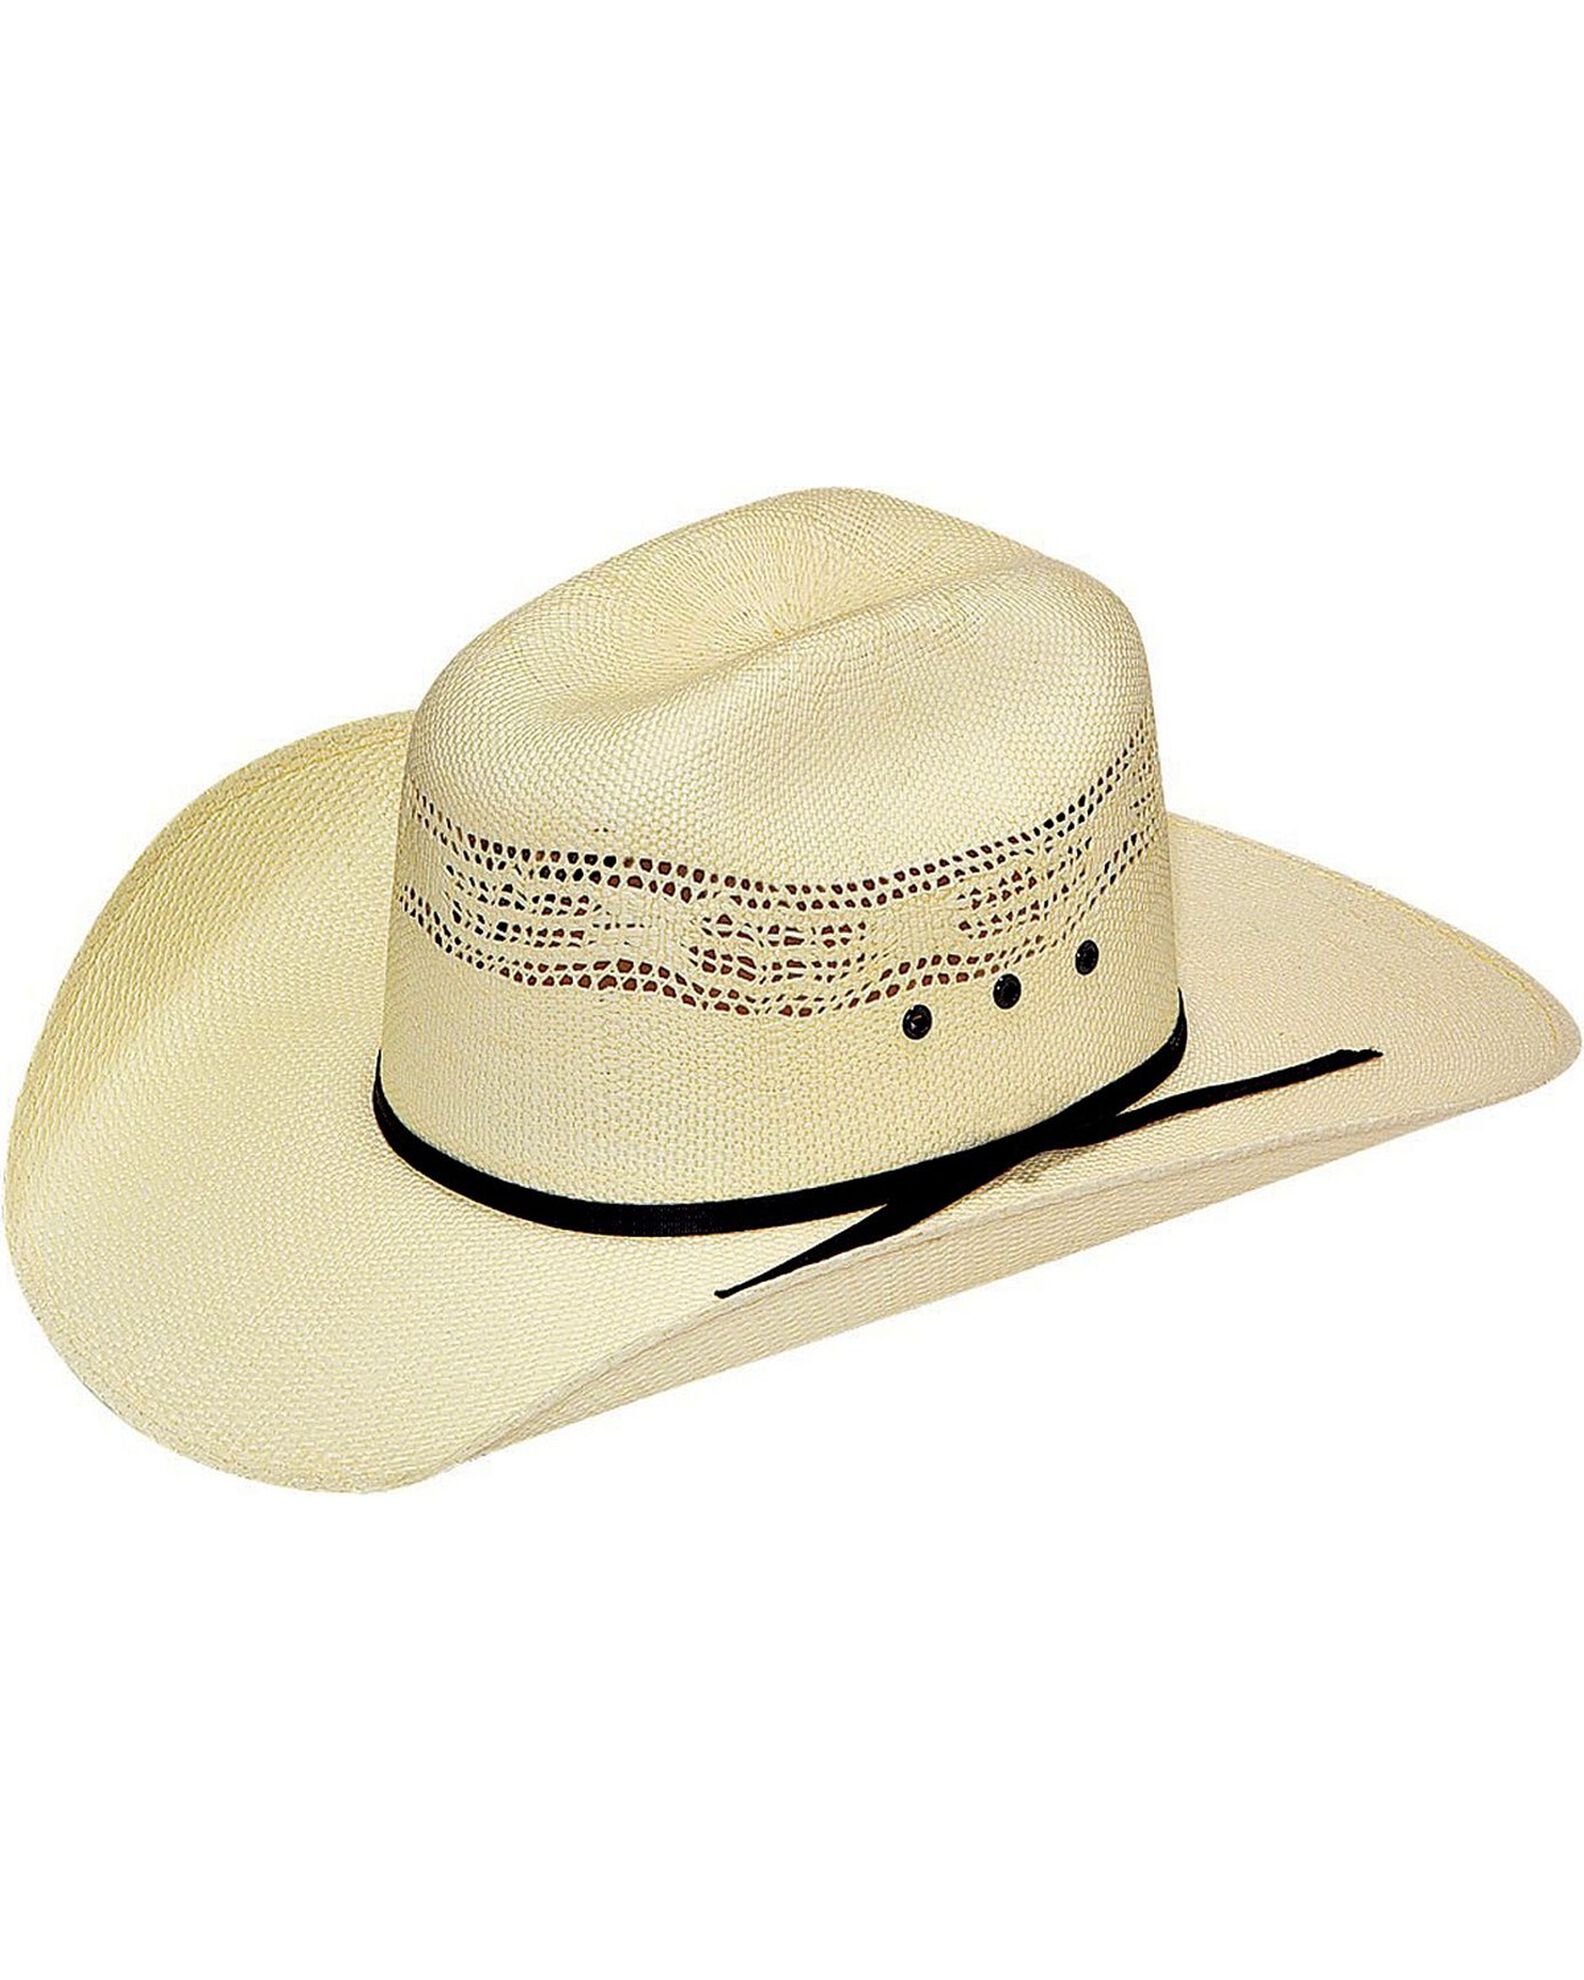 Twister Boys' Bangora Straw Cowboy Hat